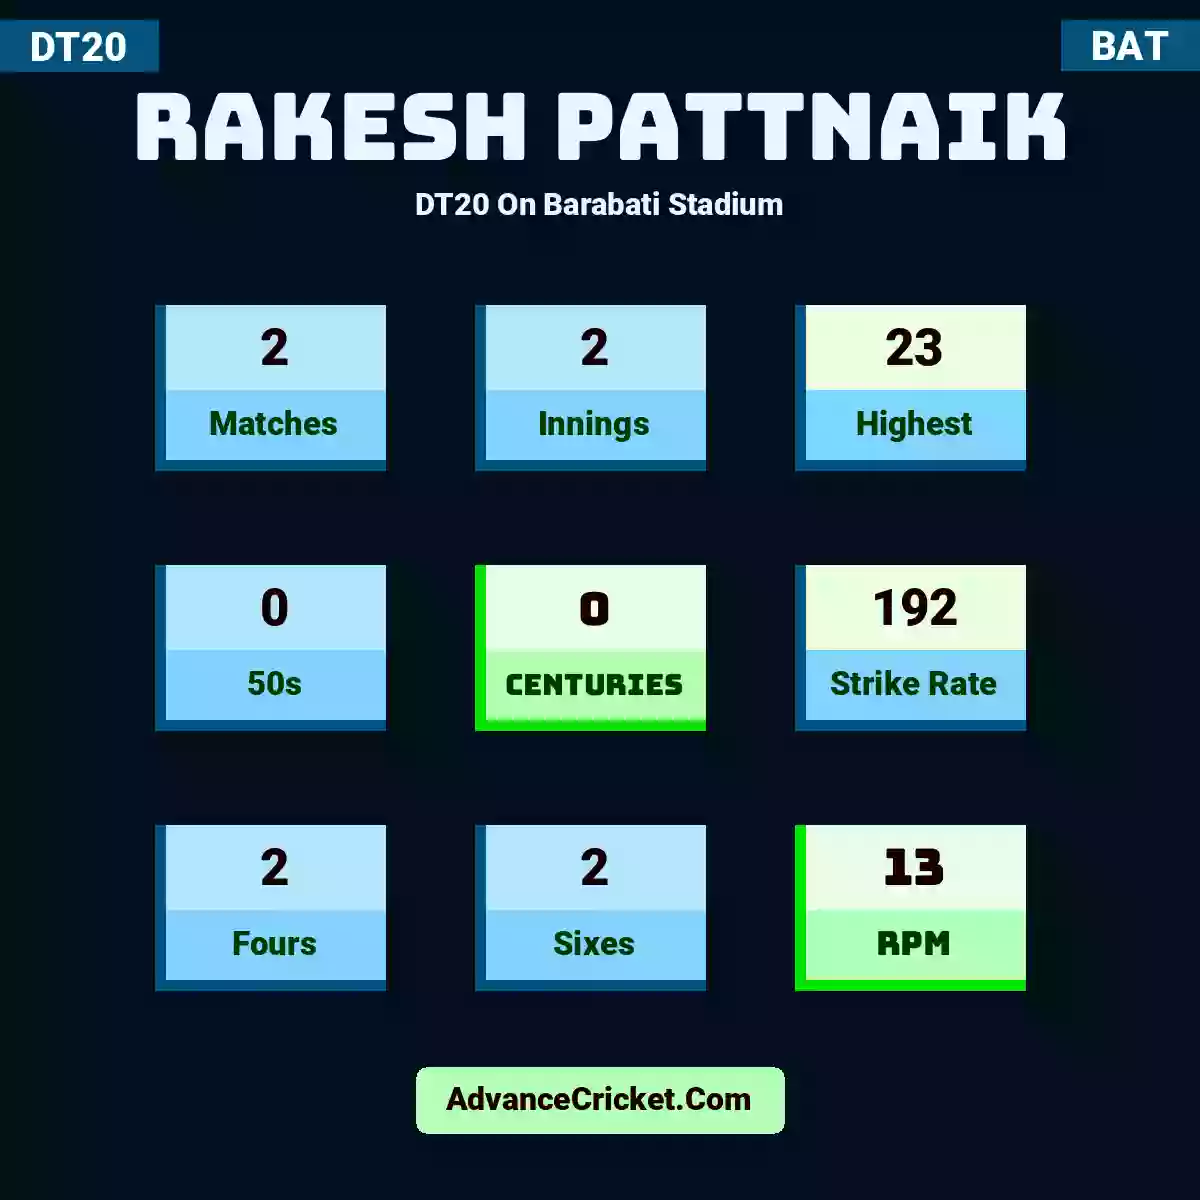 Rakesh Pattnaik DT20  On Barabati Stadium, Rakesh Pattnaik played 2 matches, scored 23 runs as highest, 0 half-centuries, and 0 centuries, with a strike rate of 192. R.Pattnaik hit 2 fours and 2 sixes, with an RPM of 13.